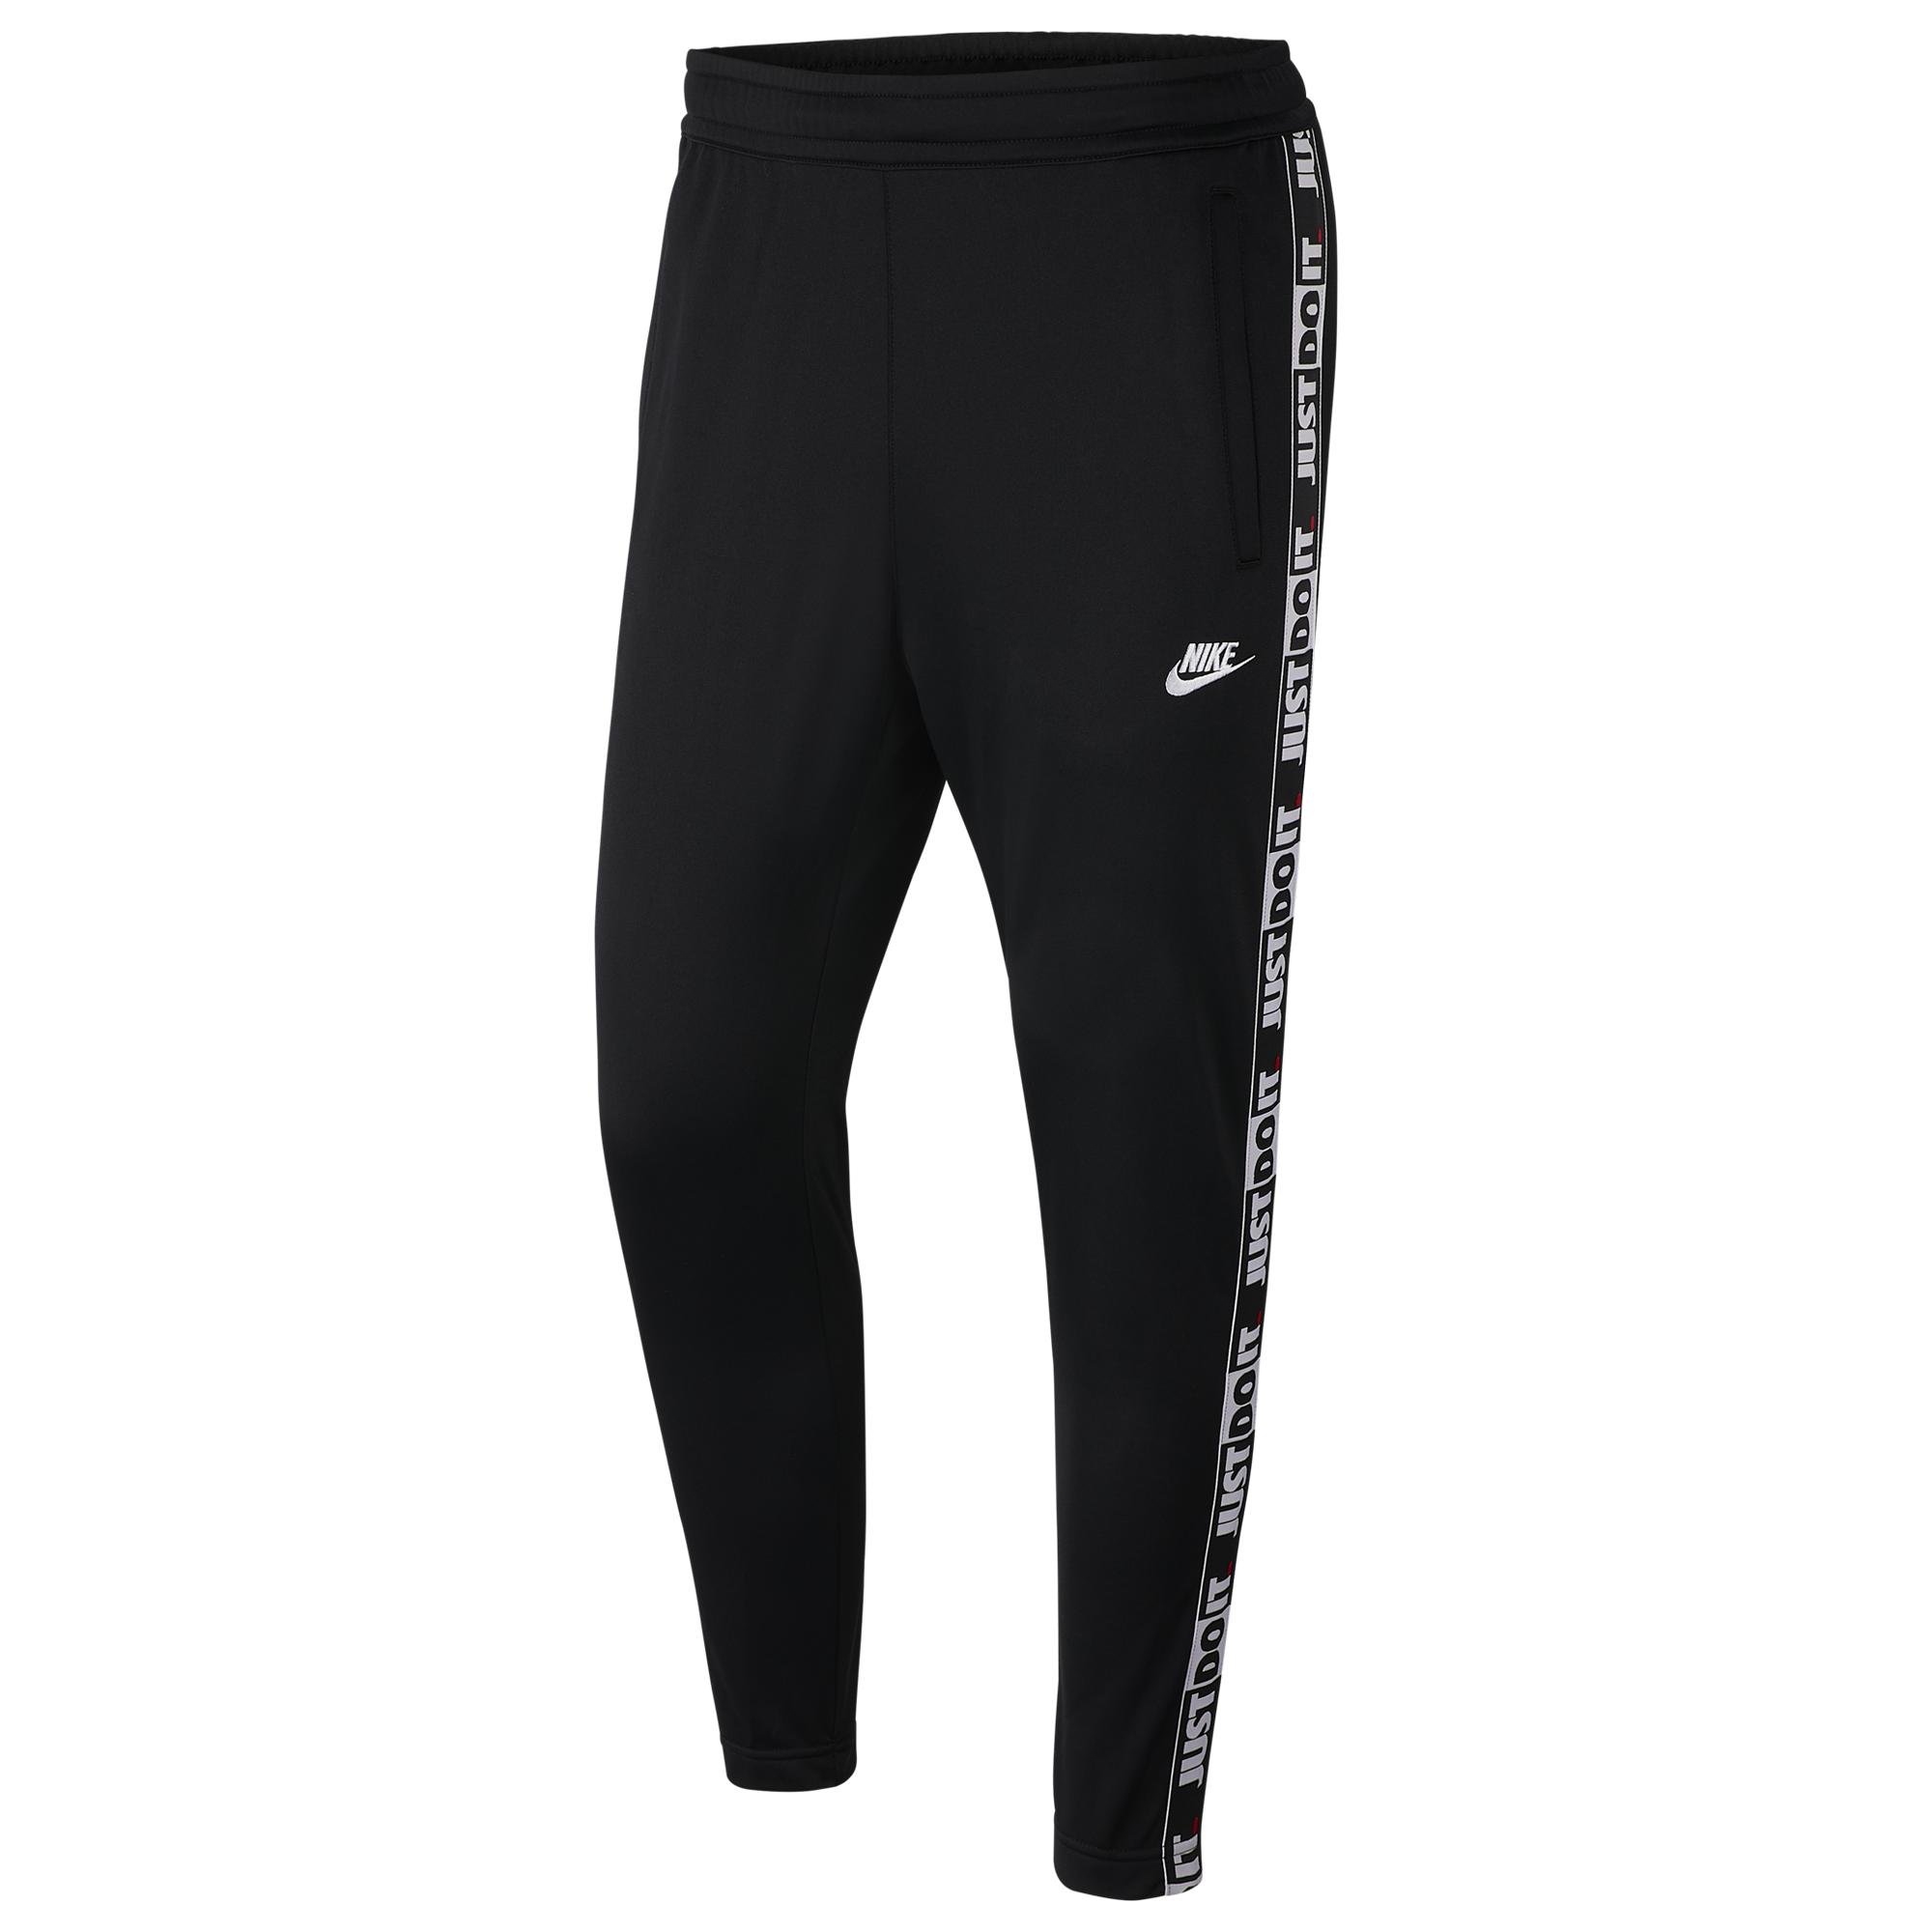 Nike Synthetic Jdi Tape Pants in Black 